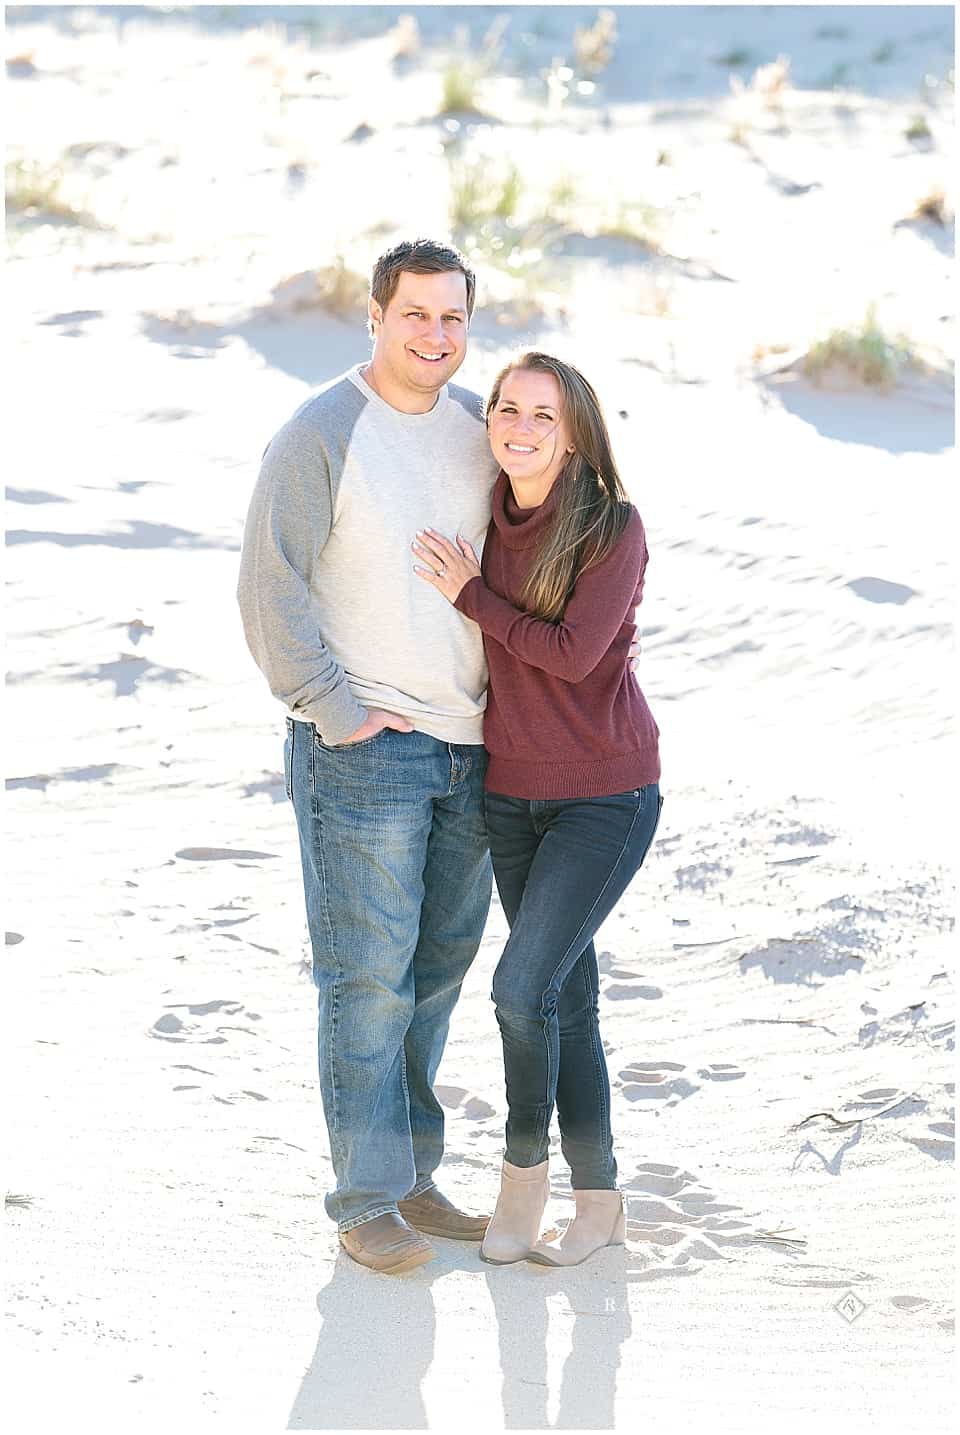 Engagement photos on sand dunes overlooking lake michigan